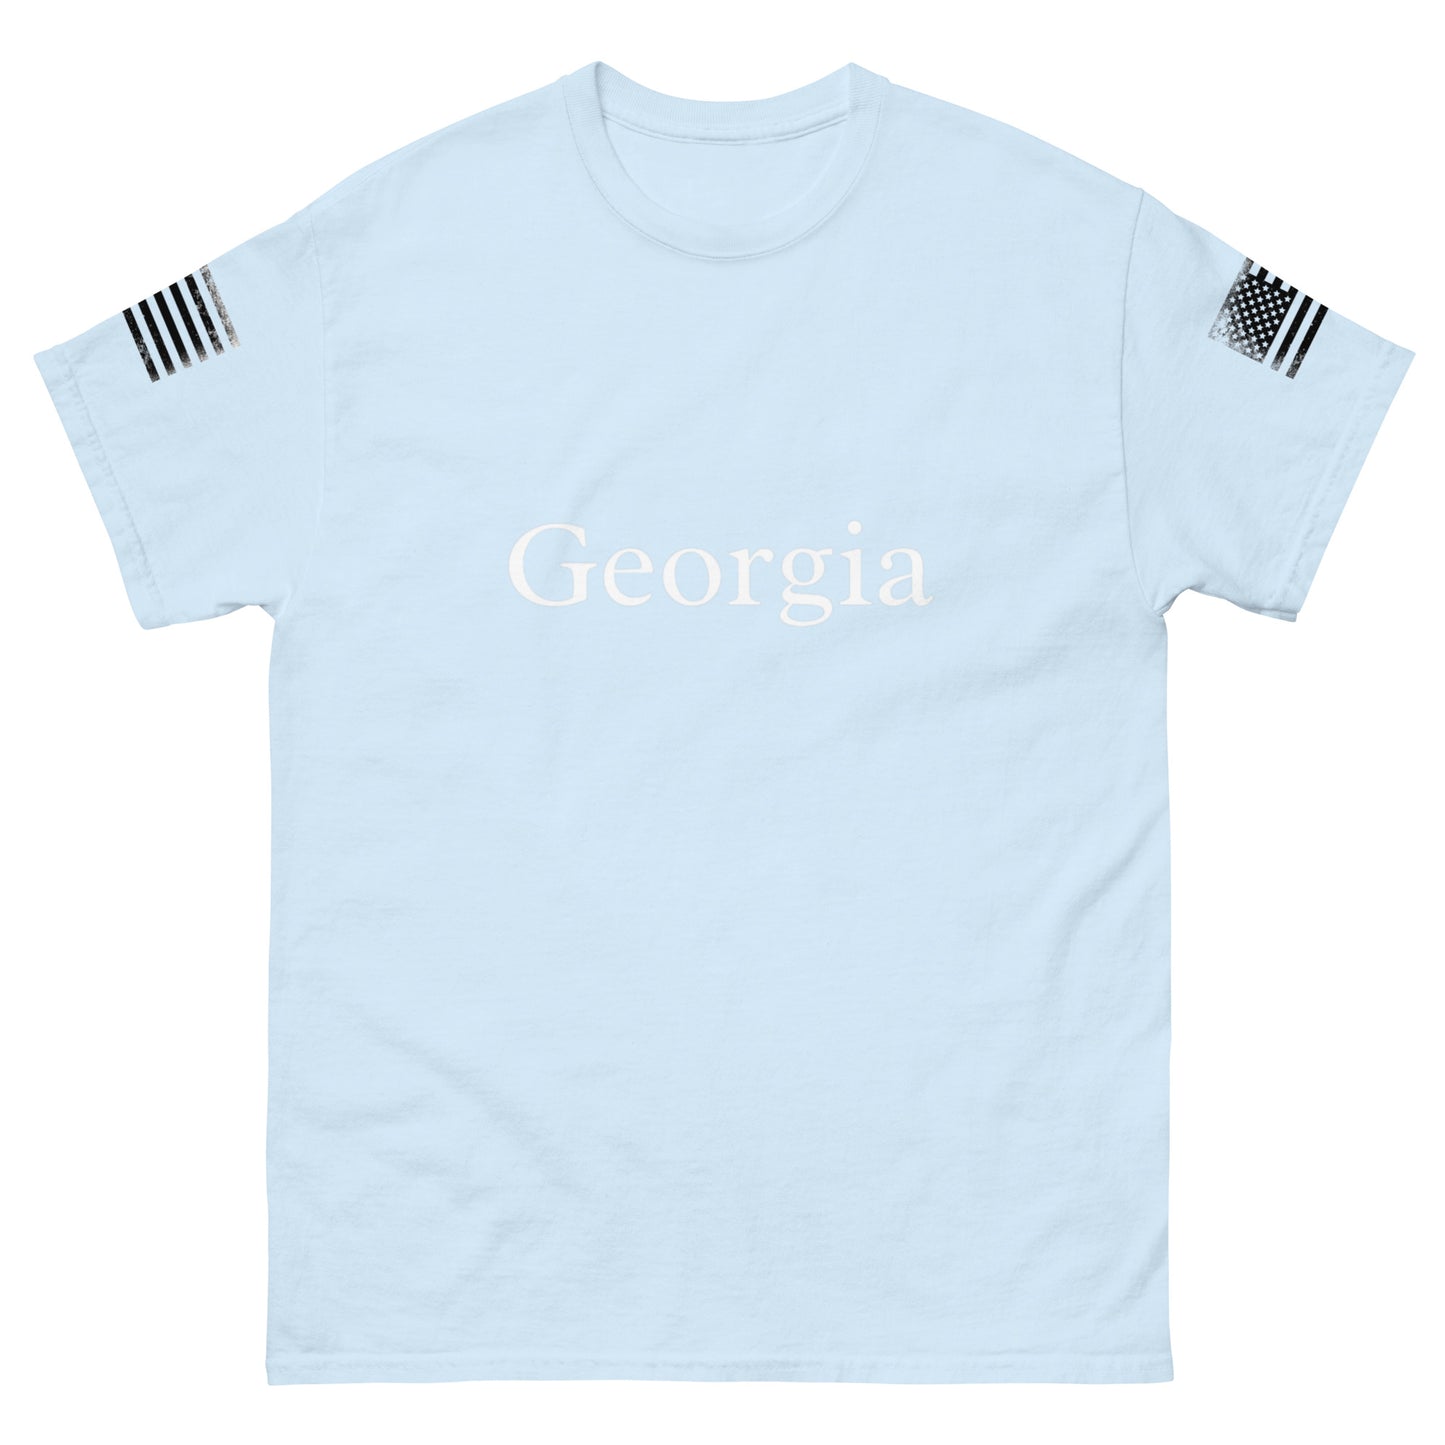 Men's Georgia Tee